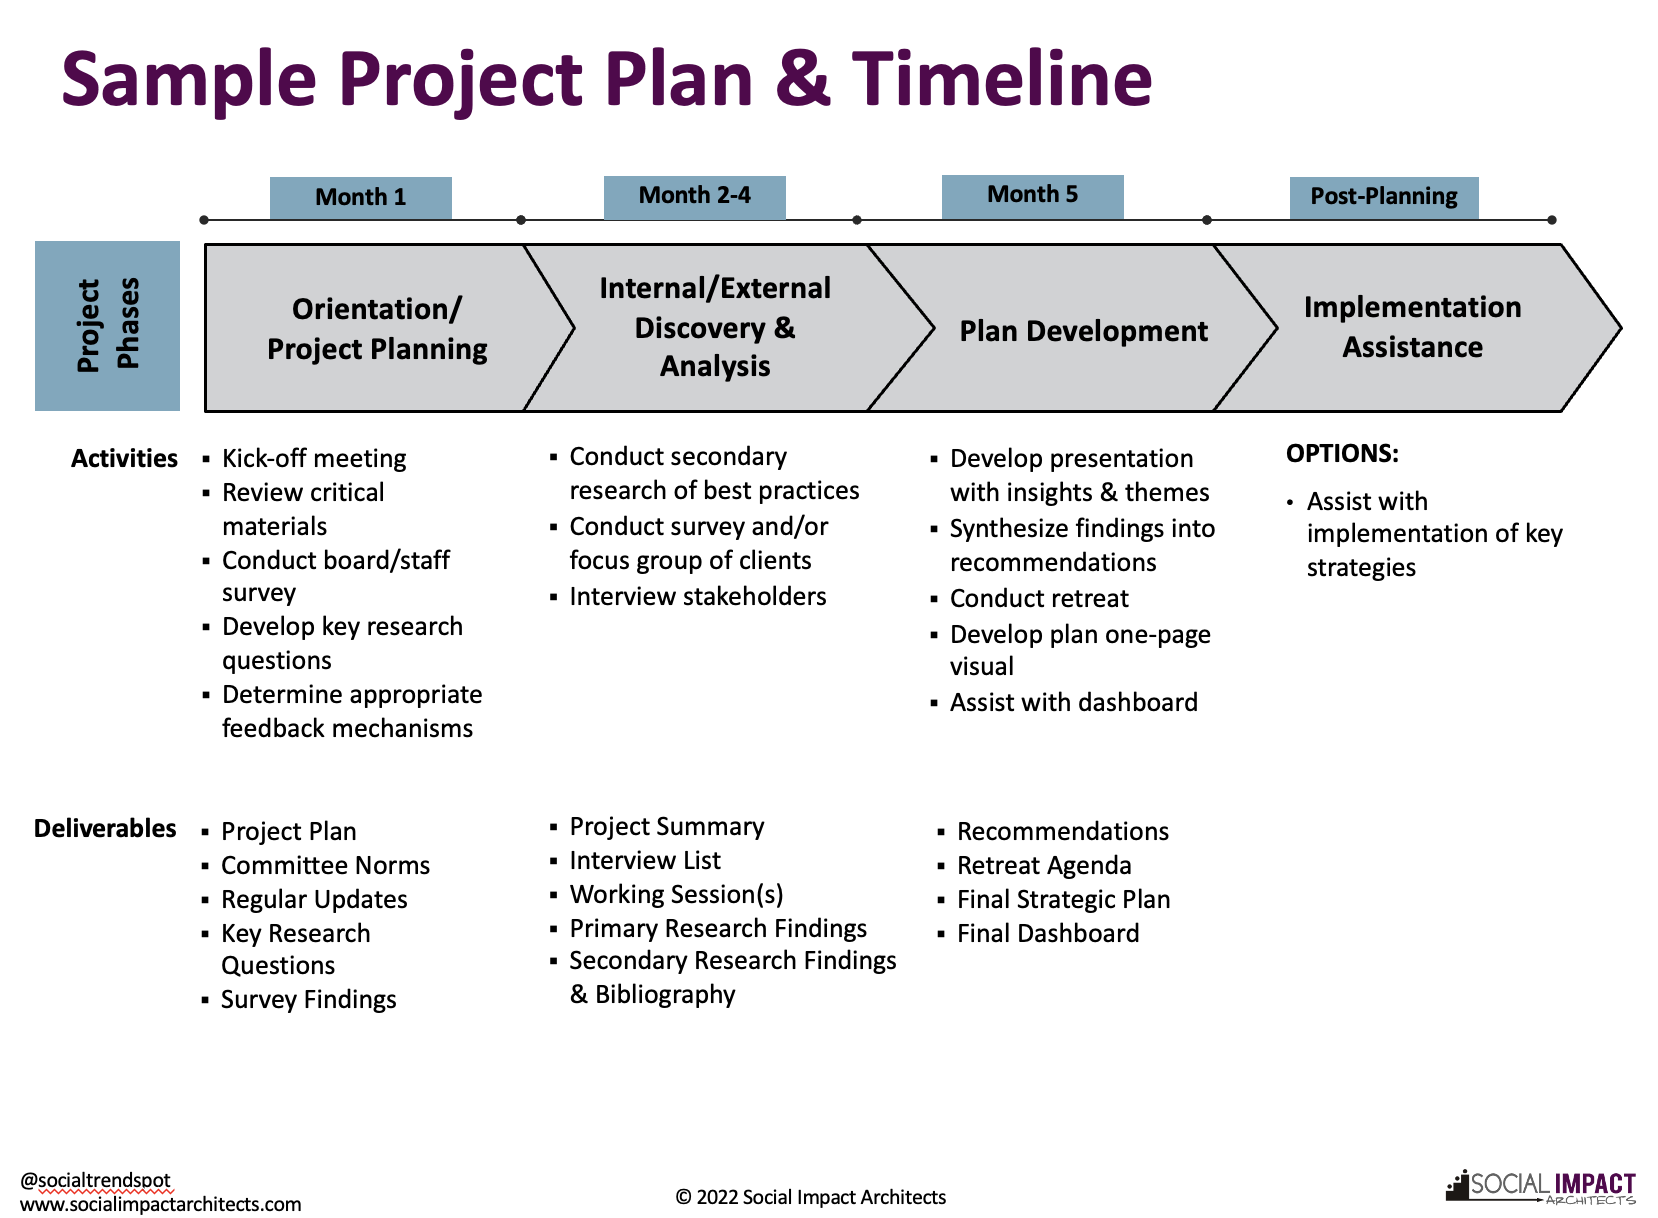 Strategic Planning Timeline Estimate pic 2022 | Social Impact Architects